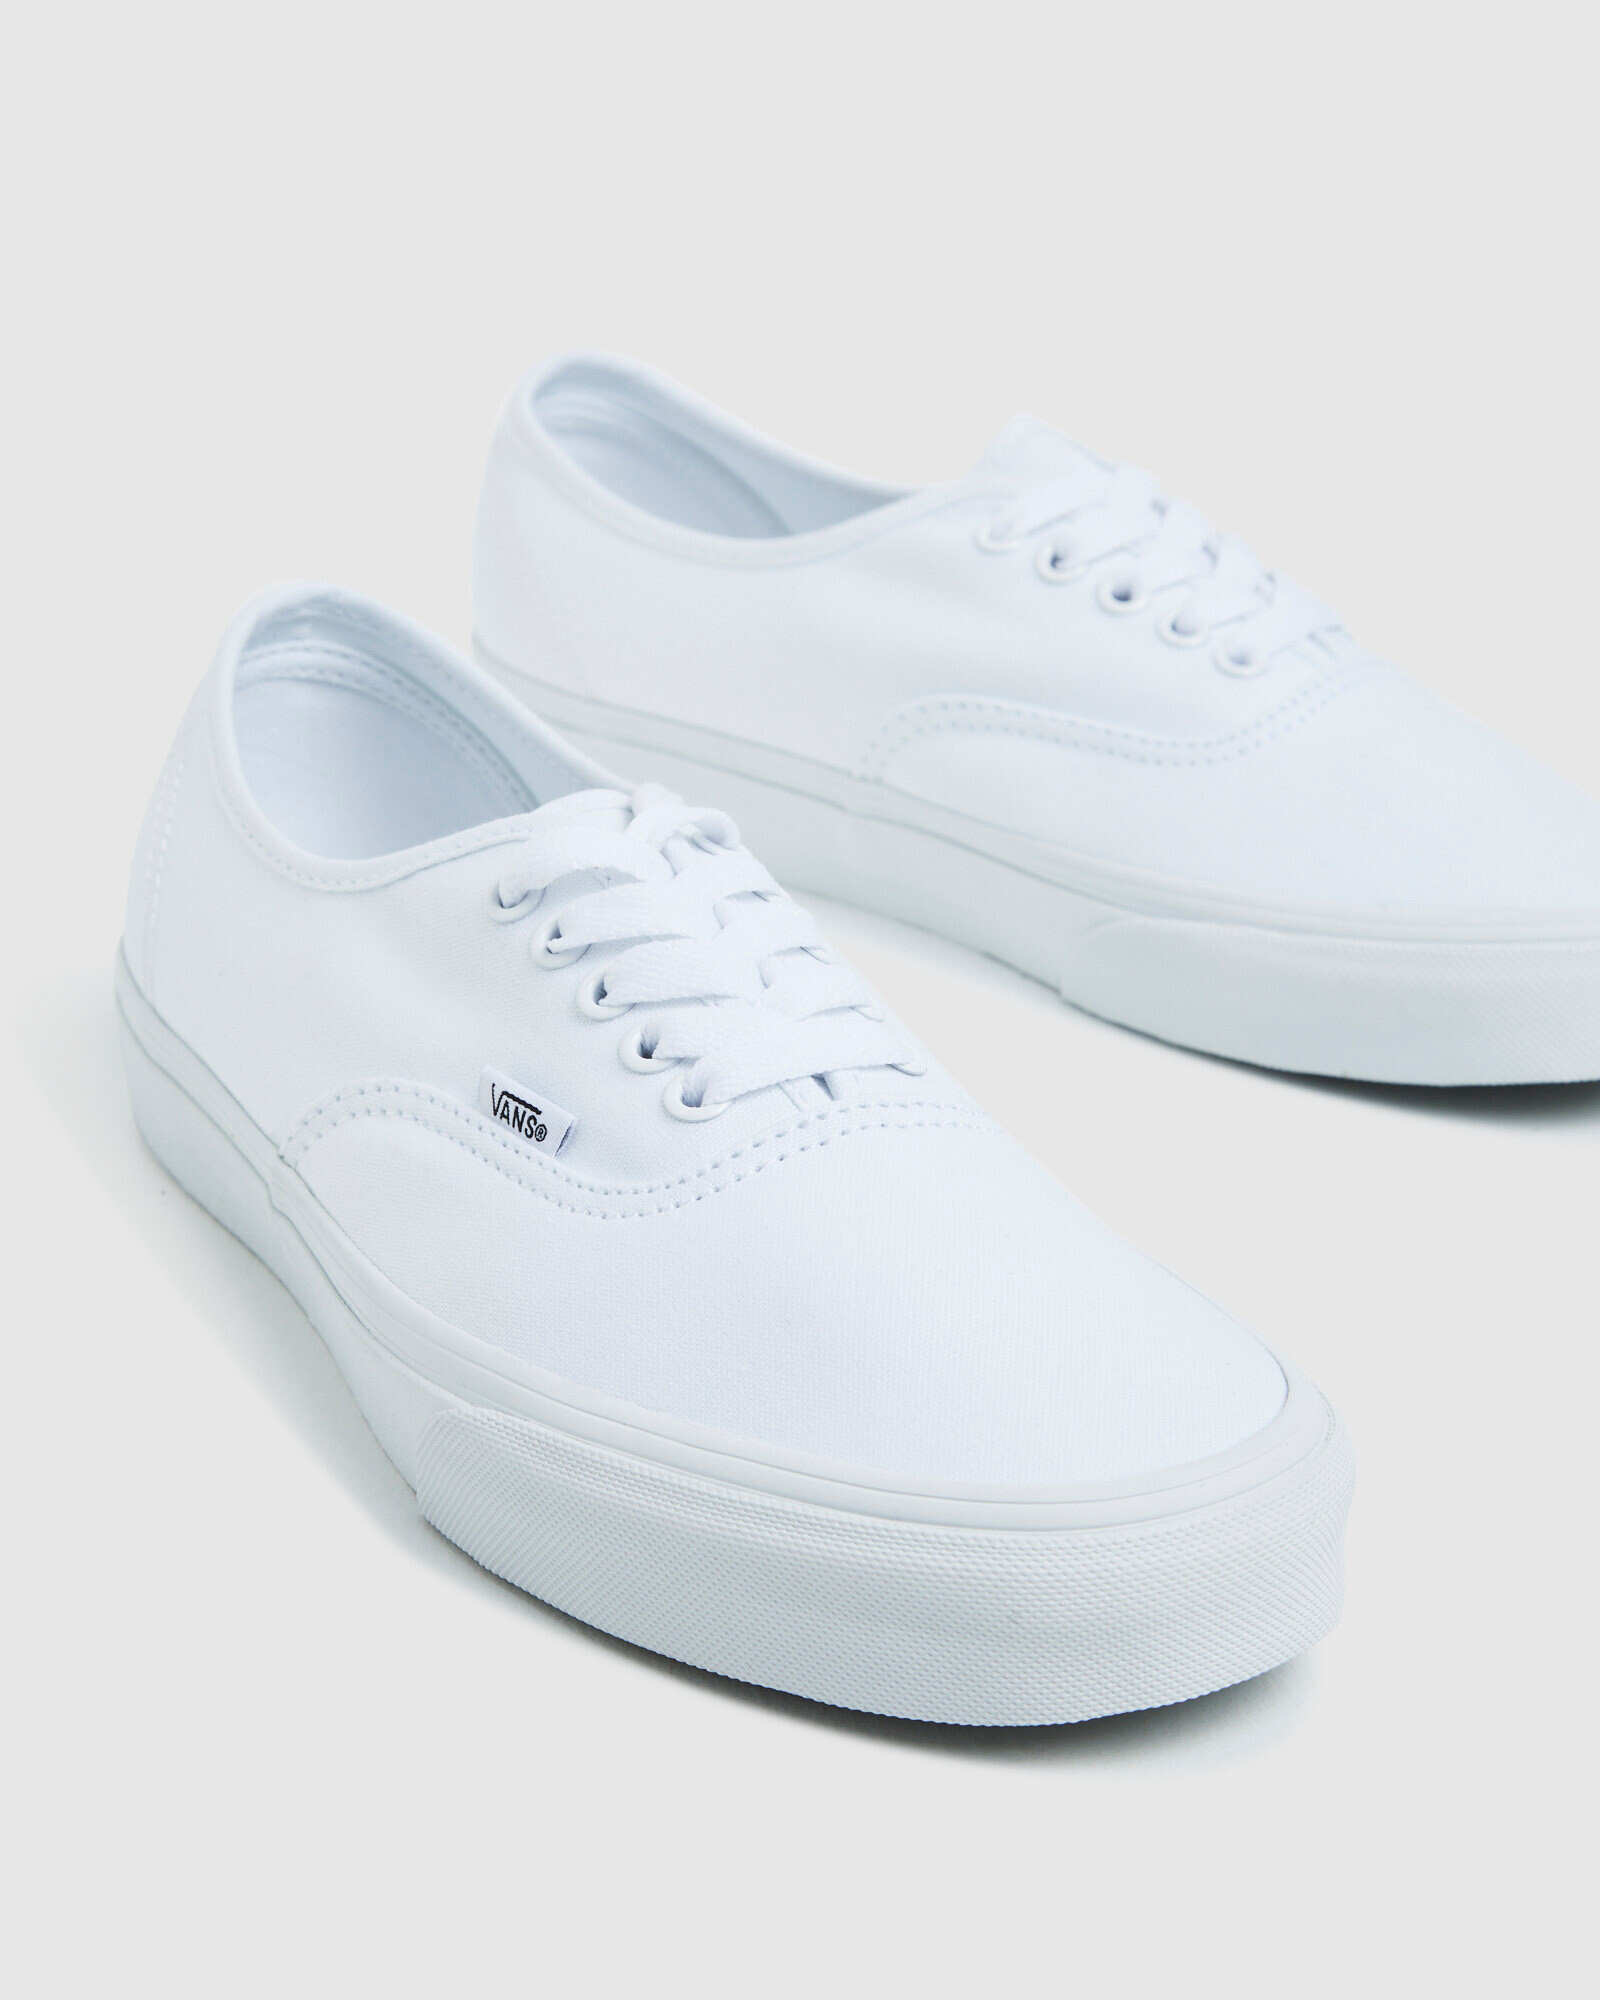 Vans Authentic Sneakers True White 